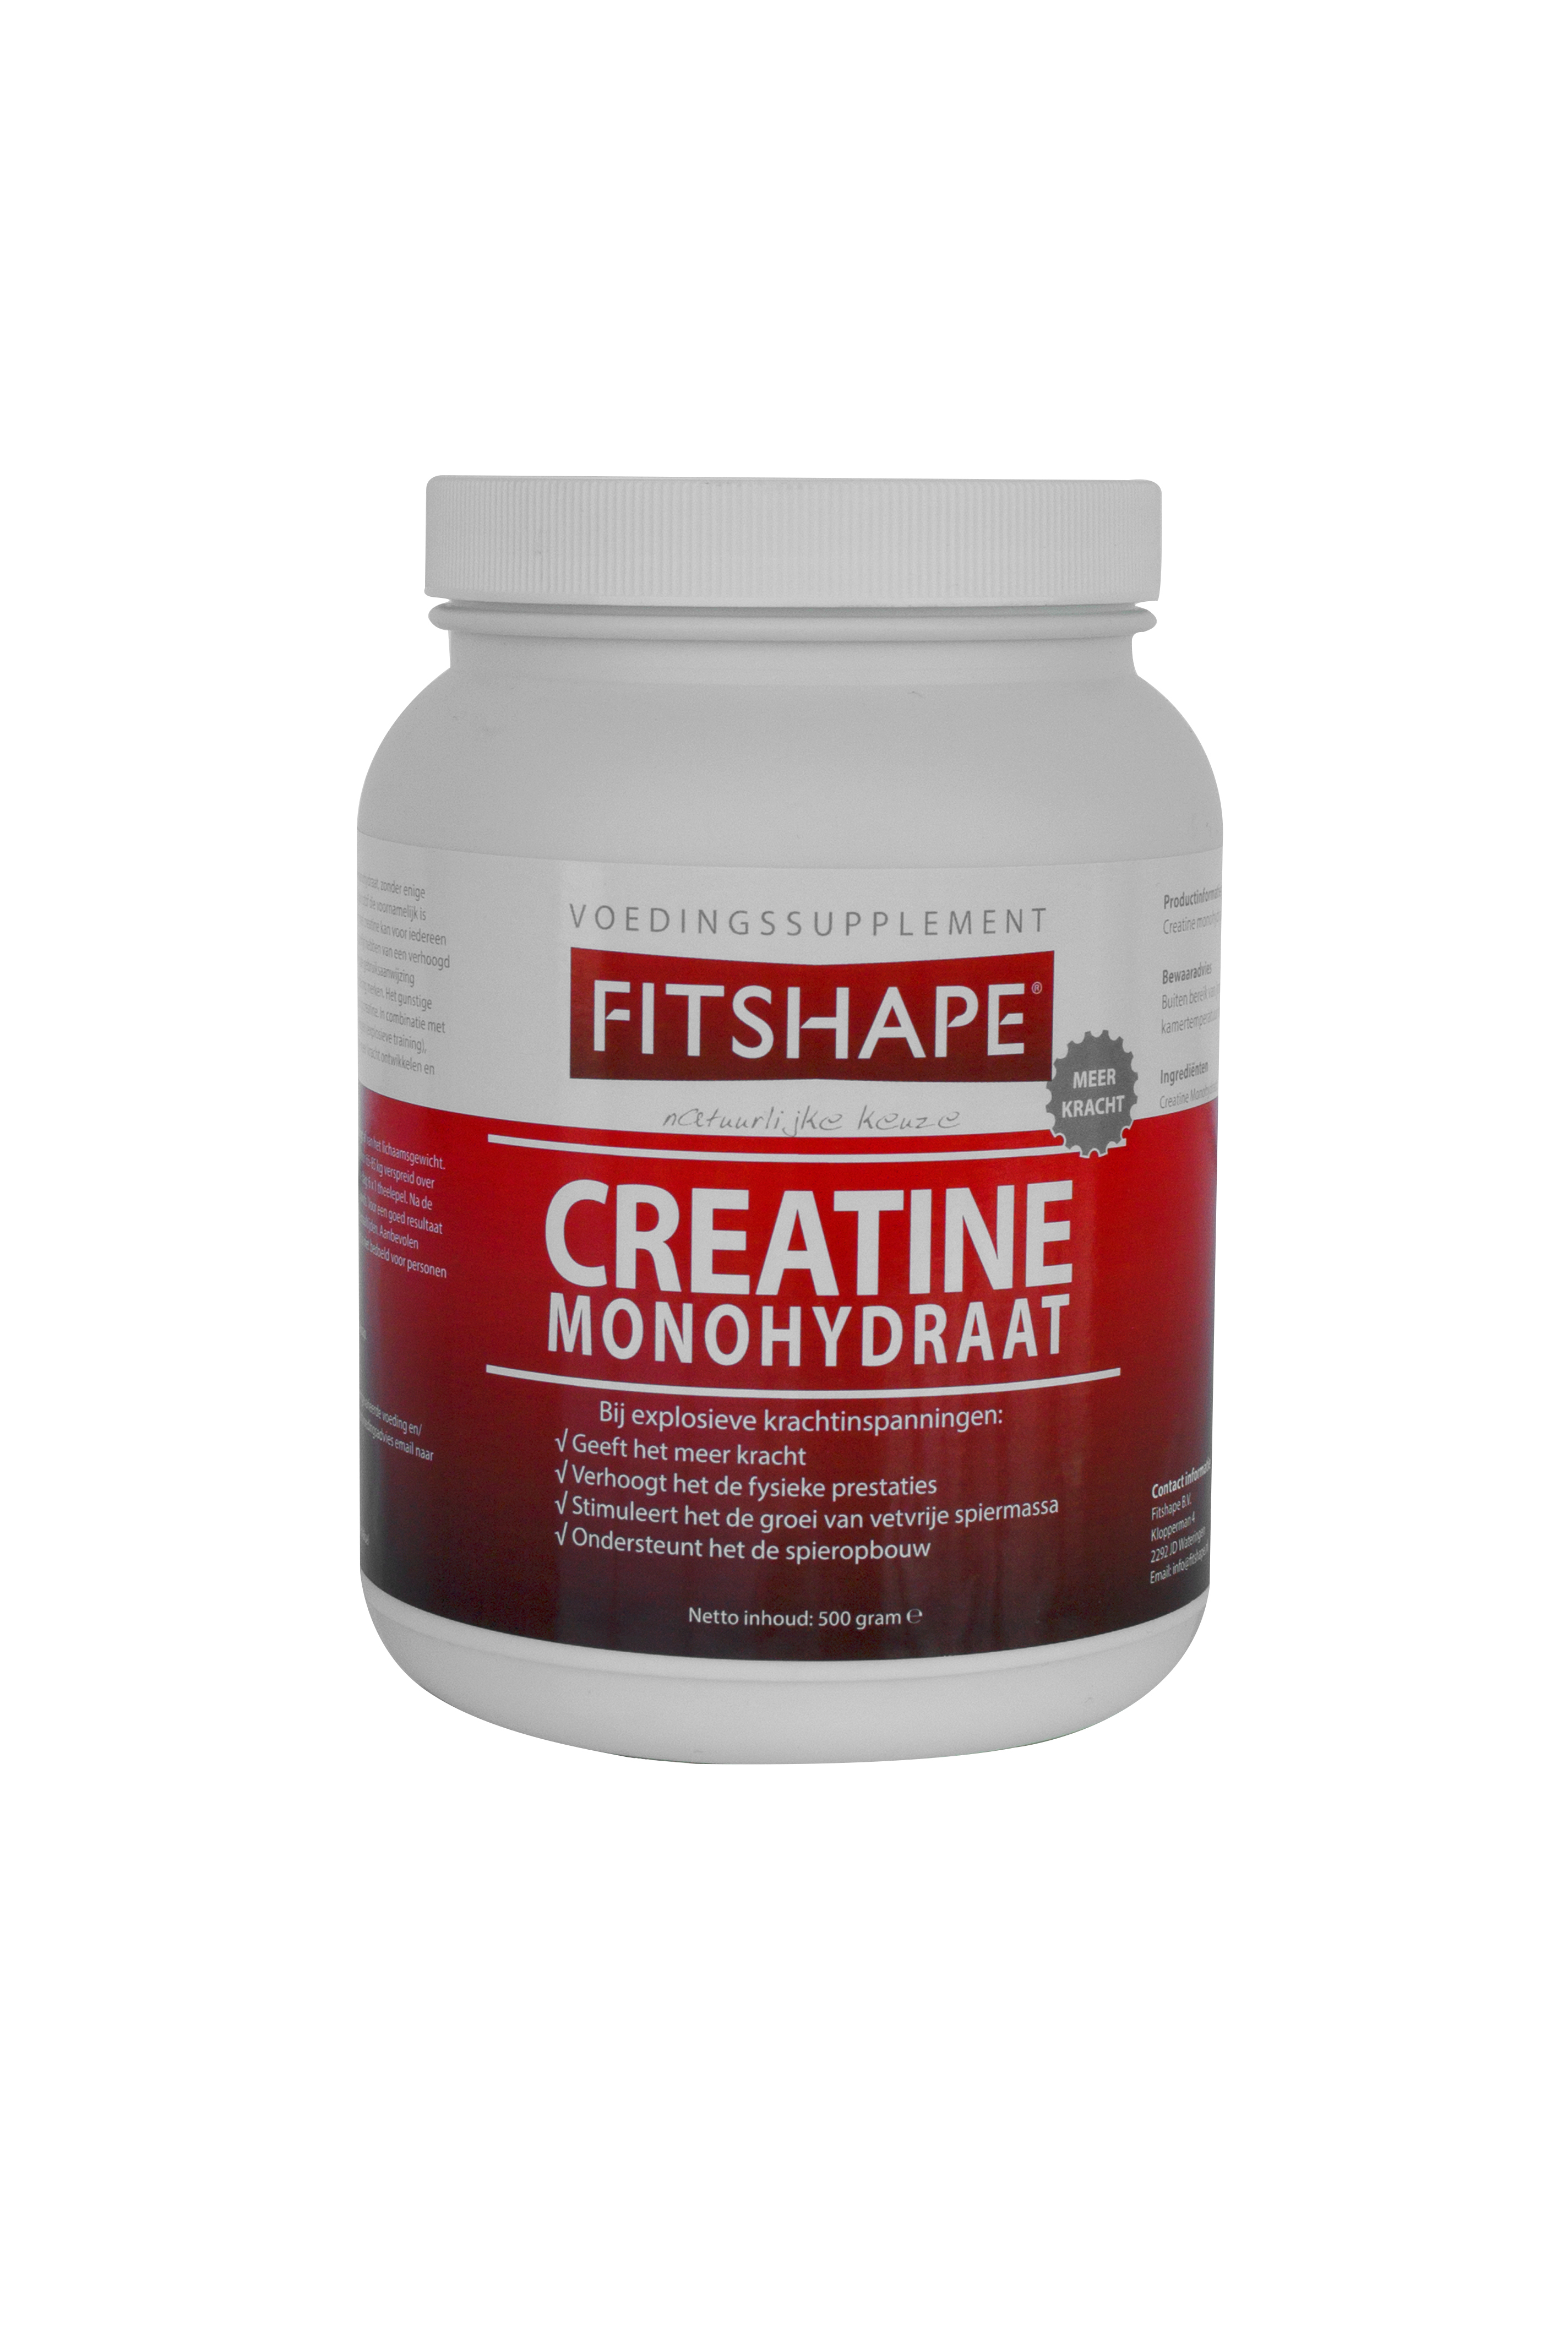 Fitshape Creatine Monohydraat 500gr